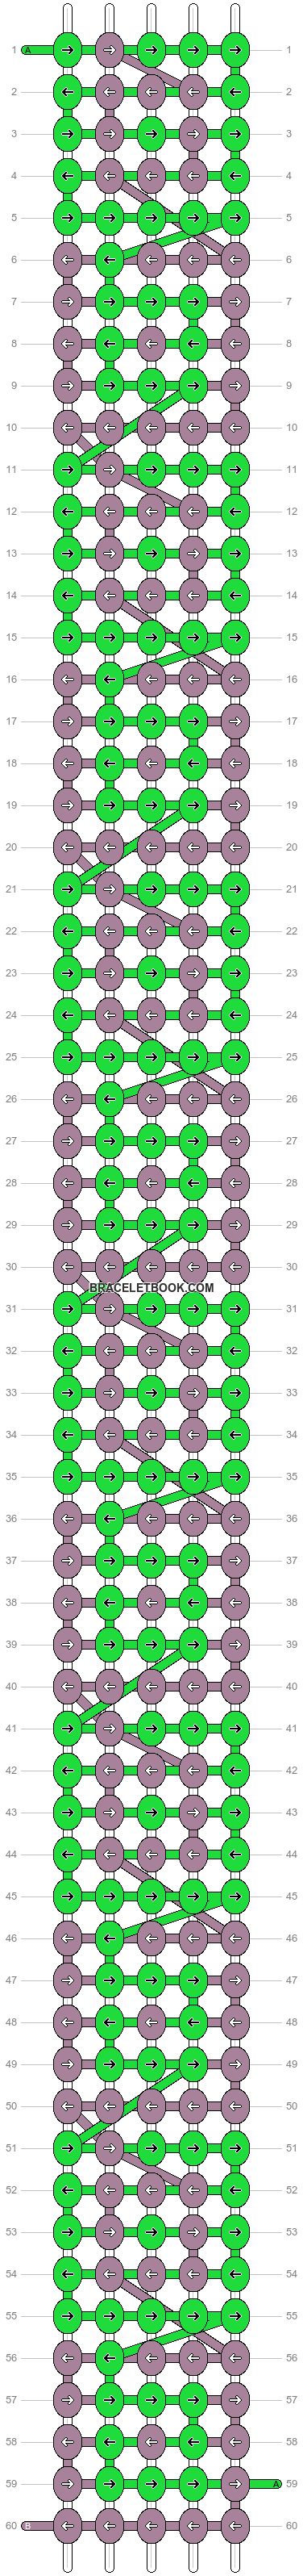 Alpha pattern #44556 variation #171949 pattern